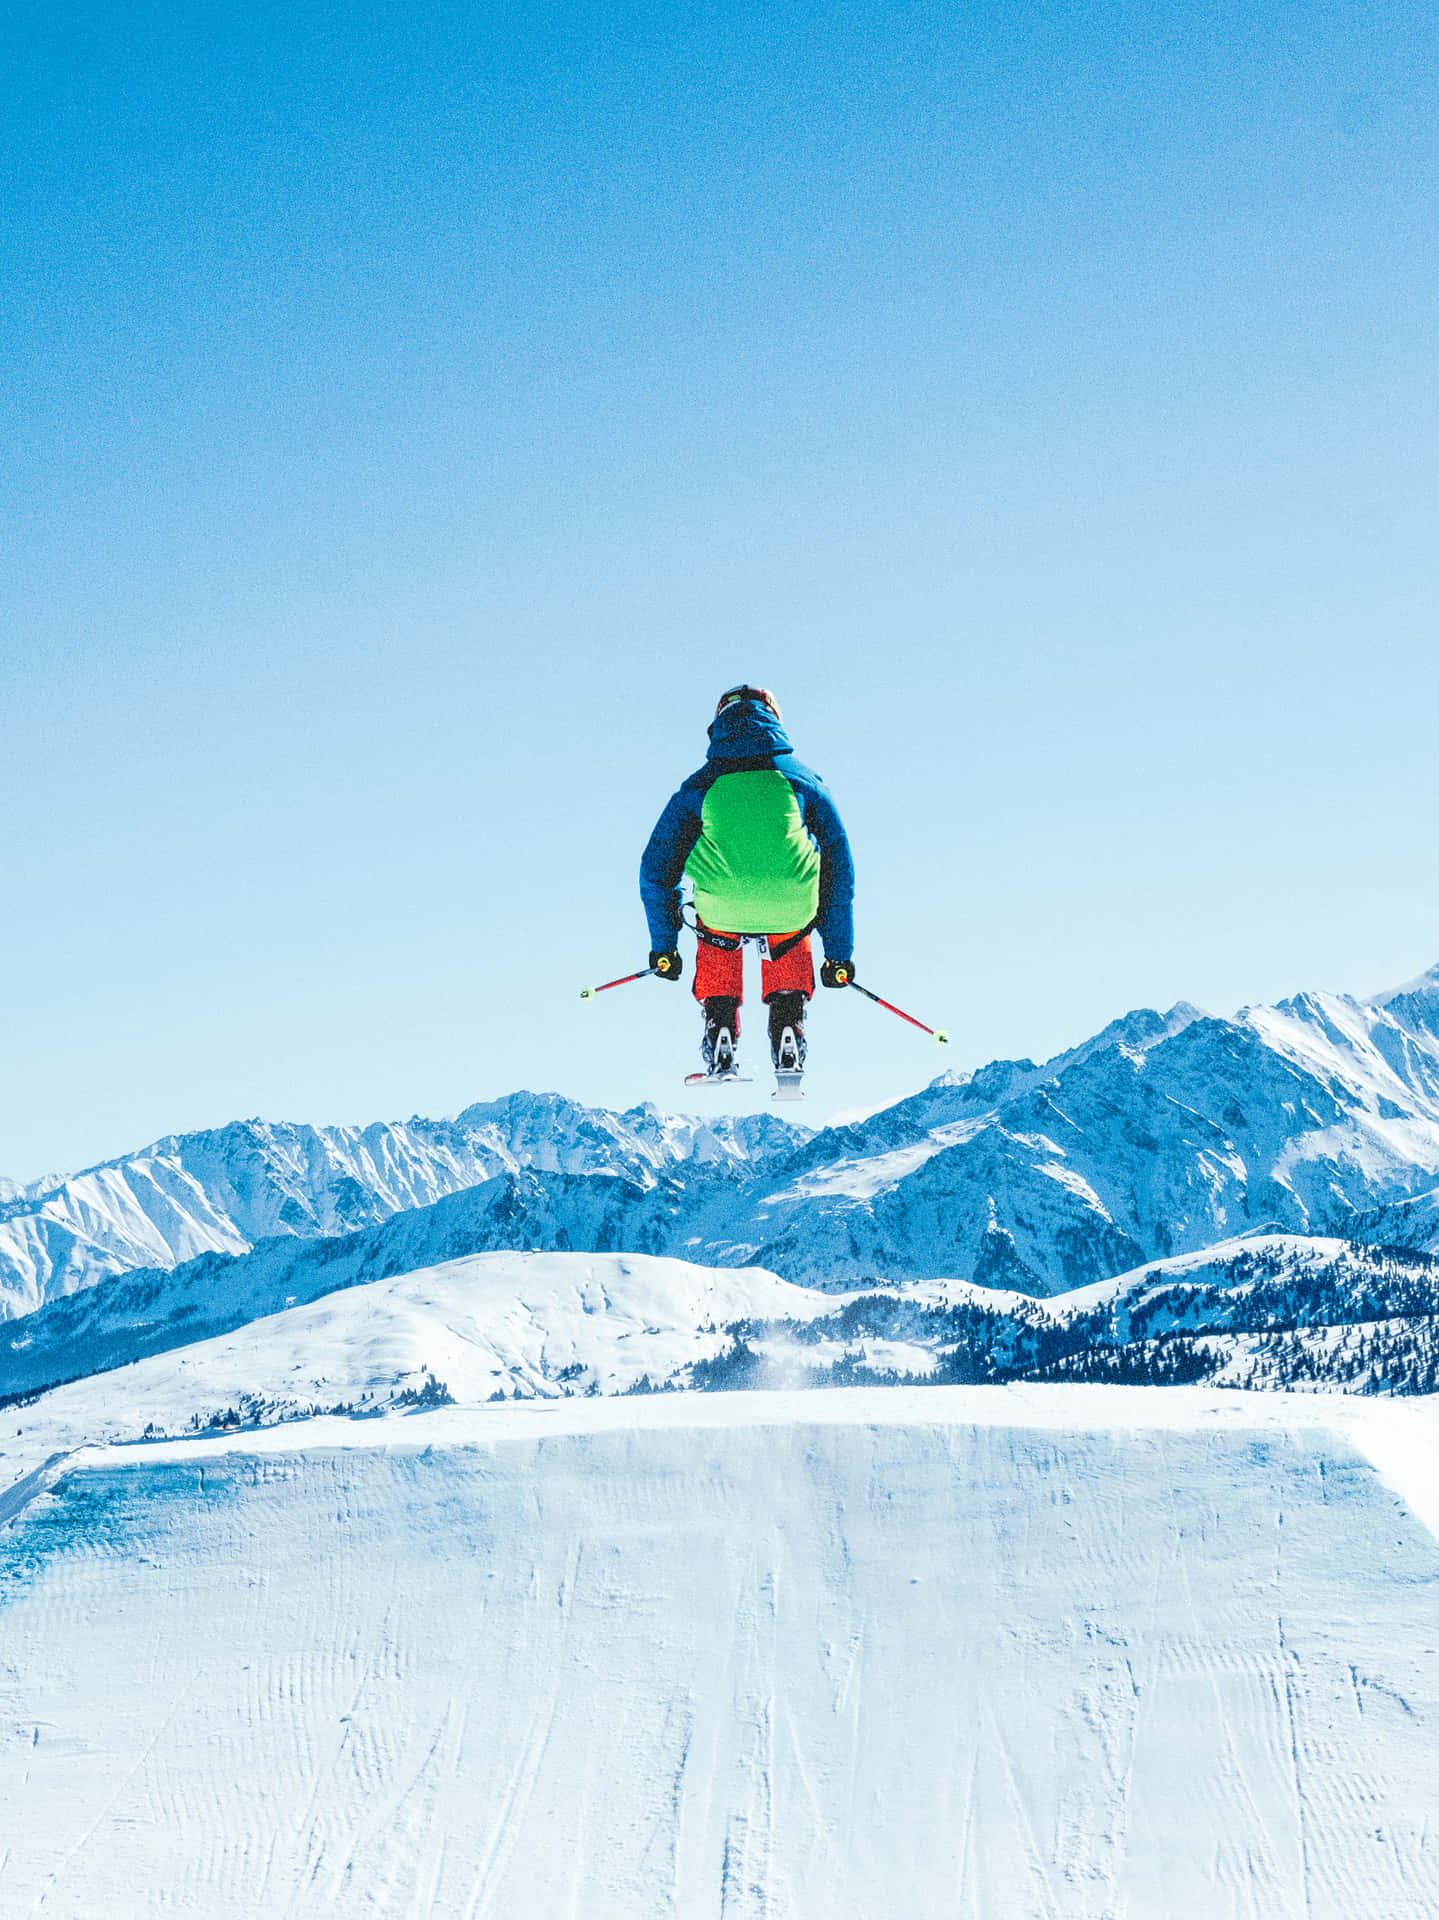 Professional skier gliding down snowy mountain slope